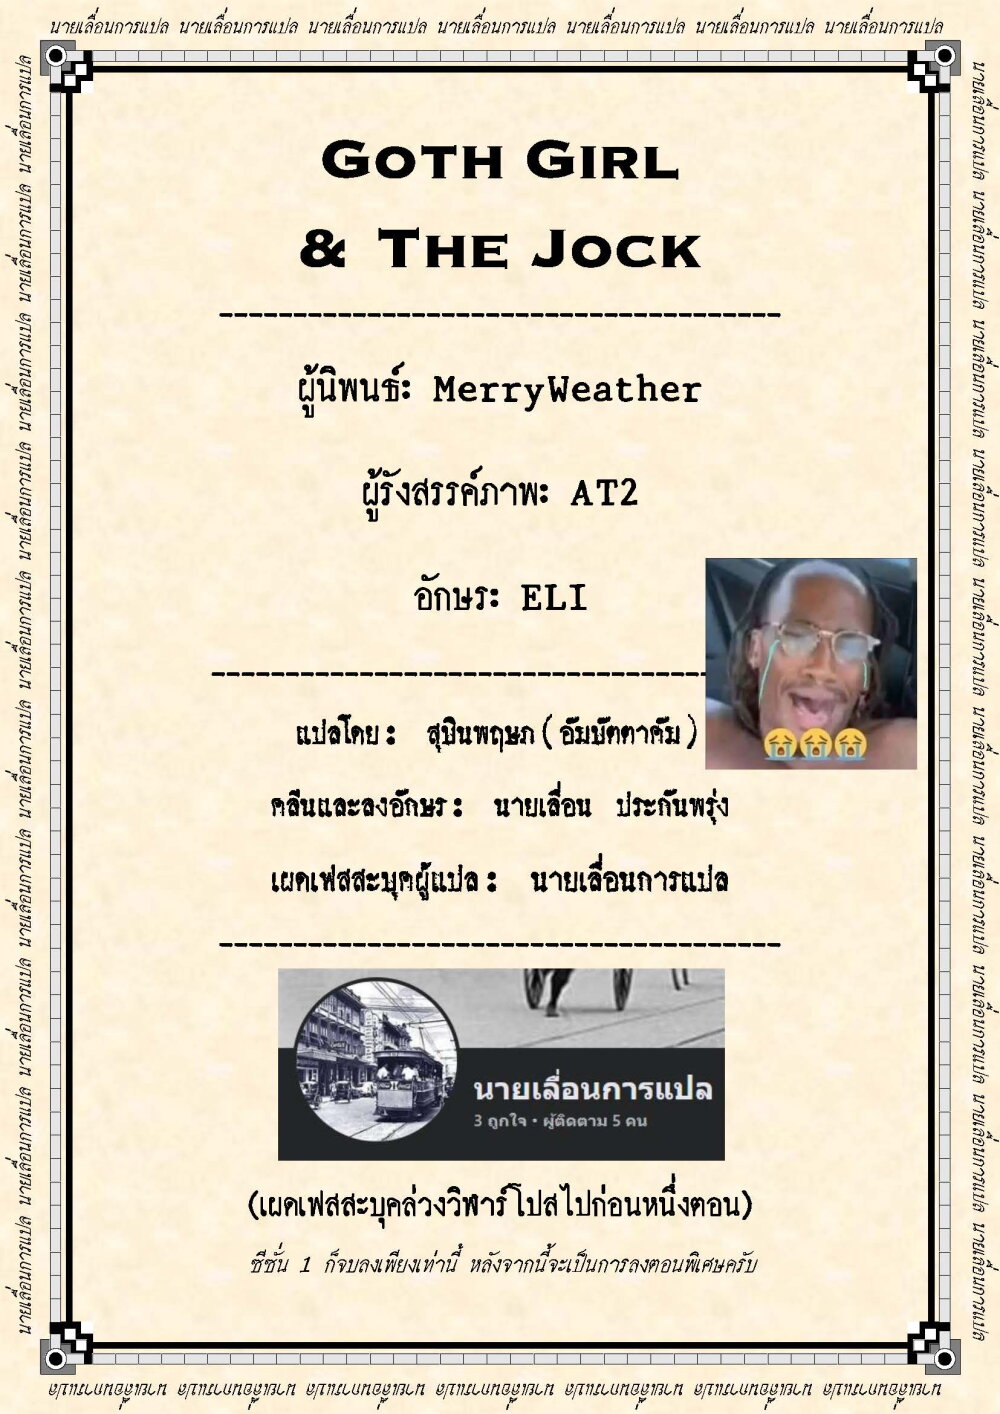 Goth Girl & The Jock 27 6